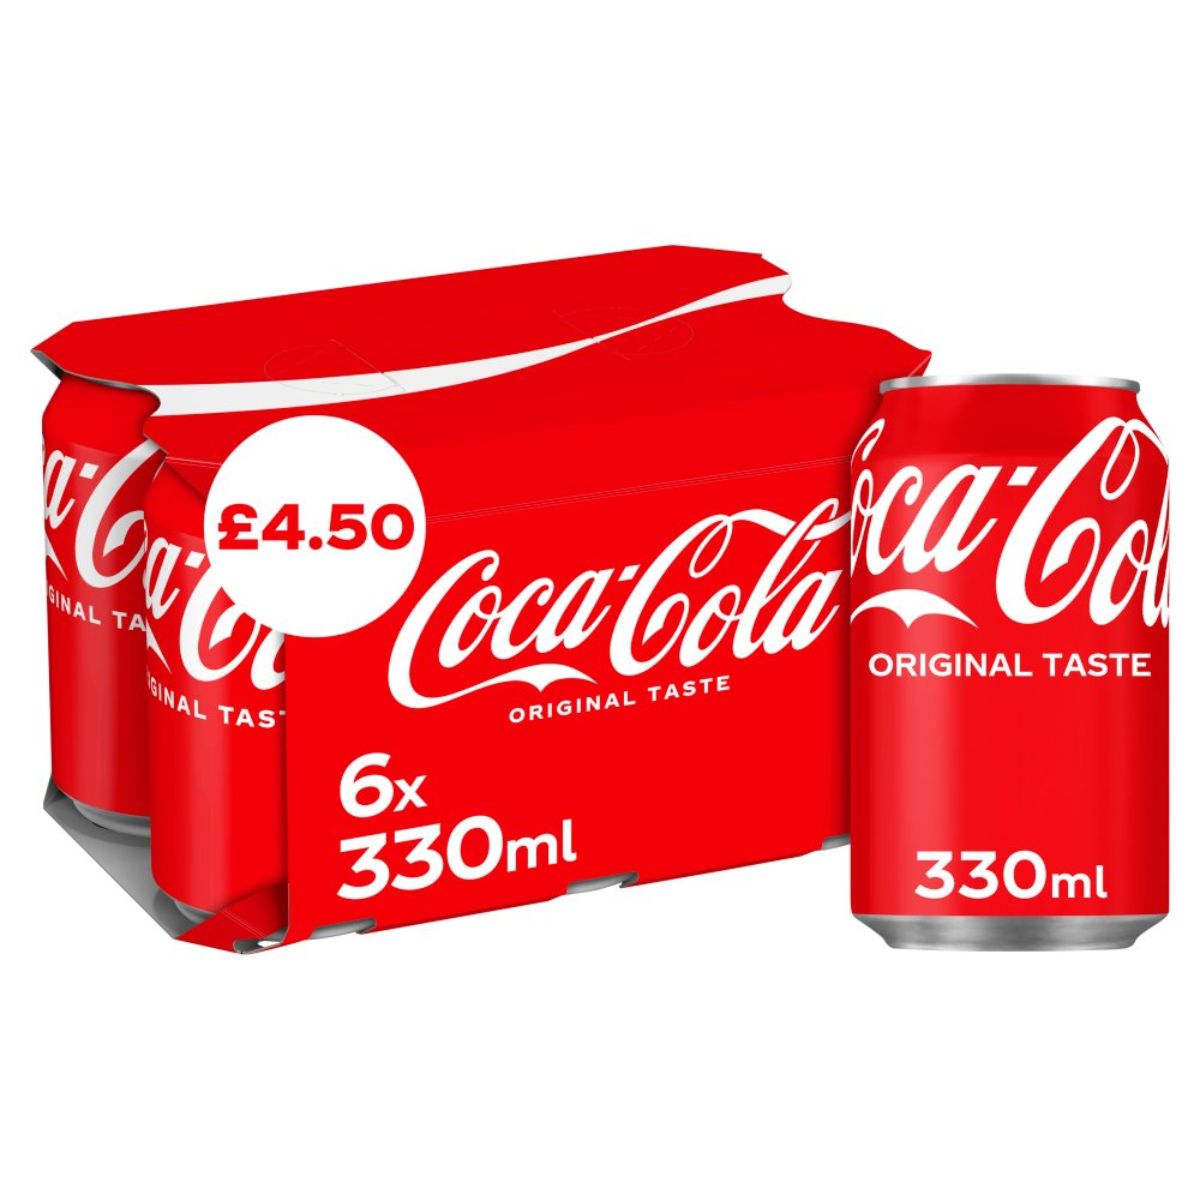 Coca Cola - Original Taste - 6 x 330ml in a box with a coca cola bottle.